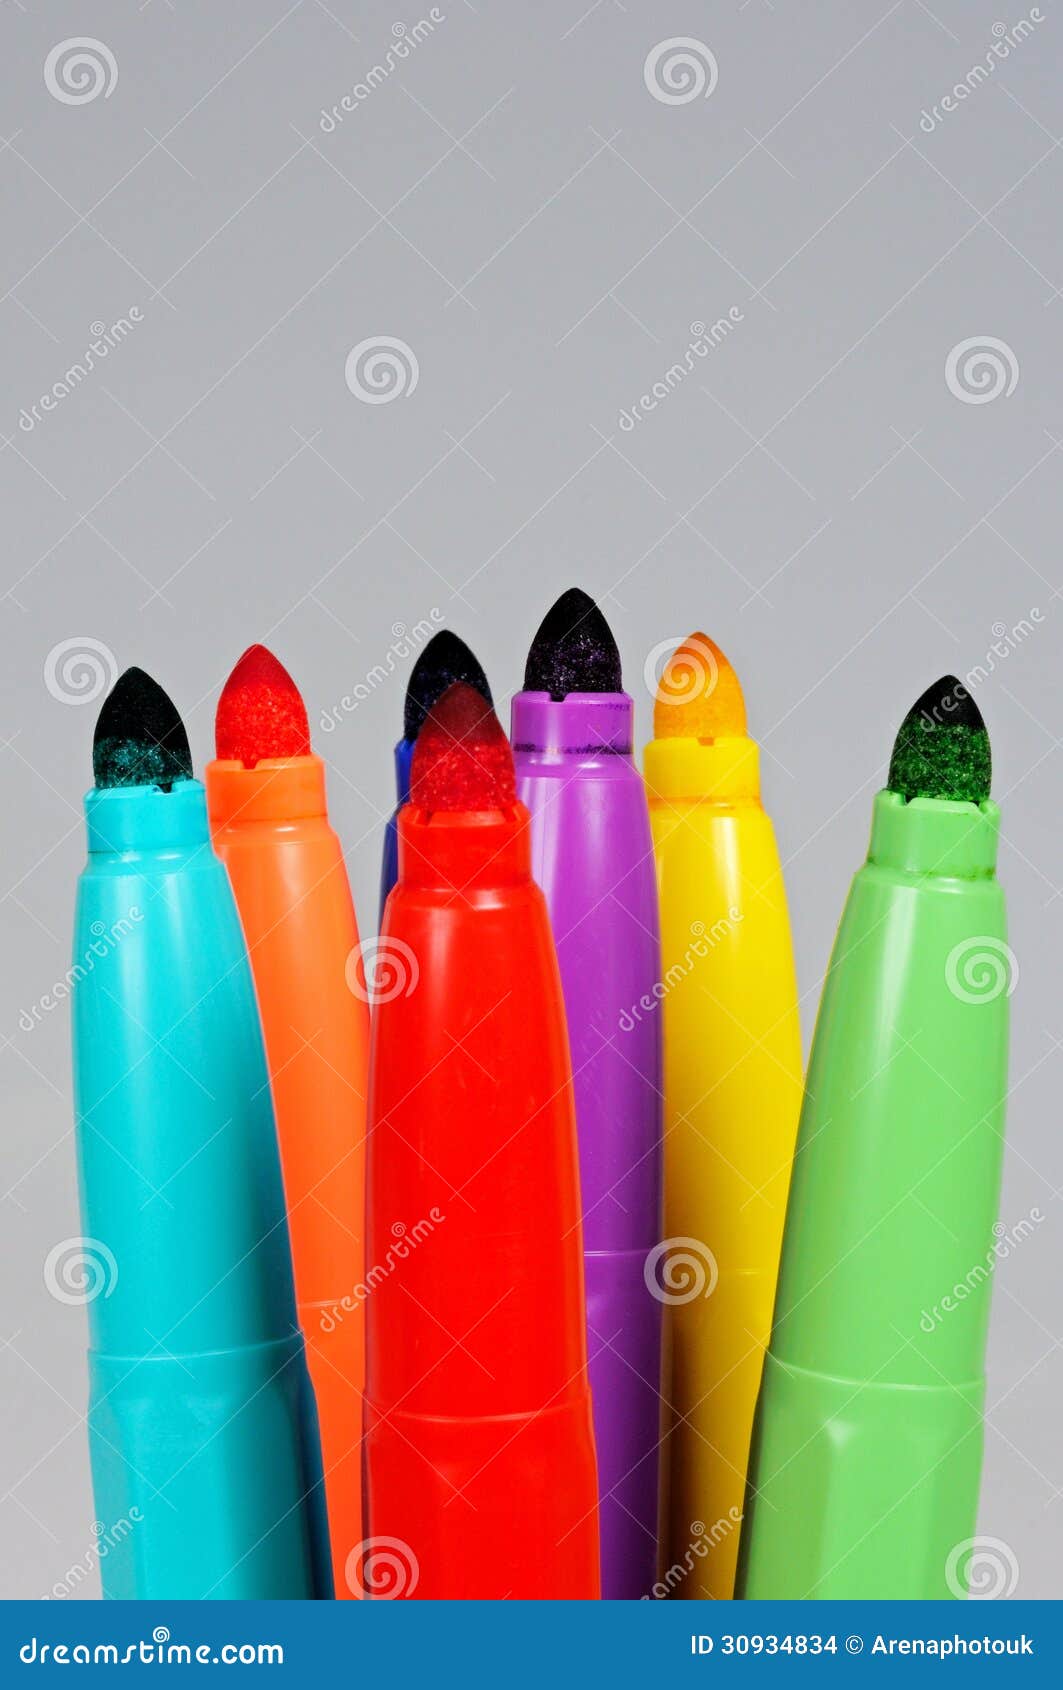 1,030 Coloured Pens Stock Photos - Free & Royalty-Free Stock